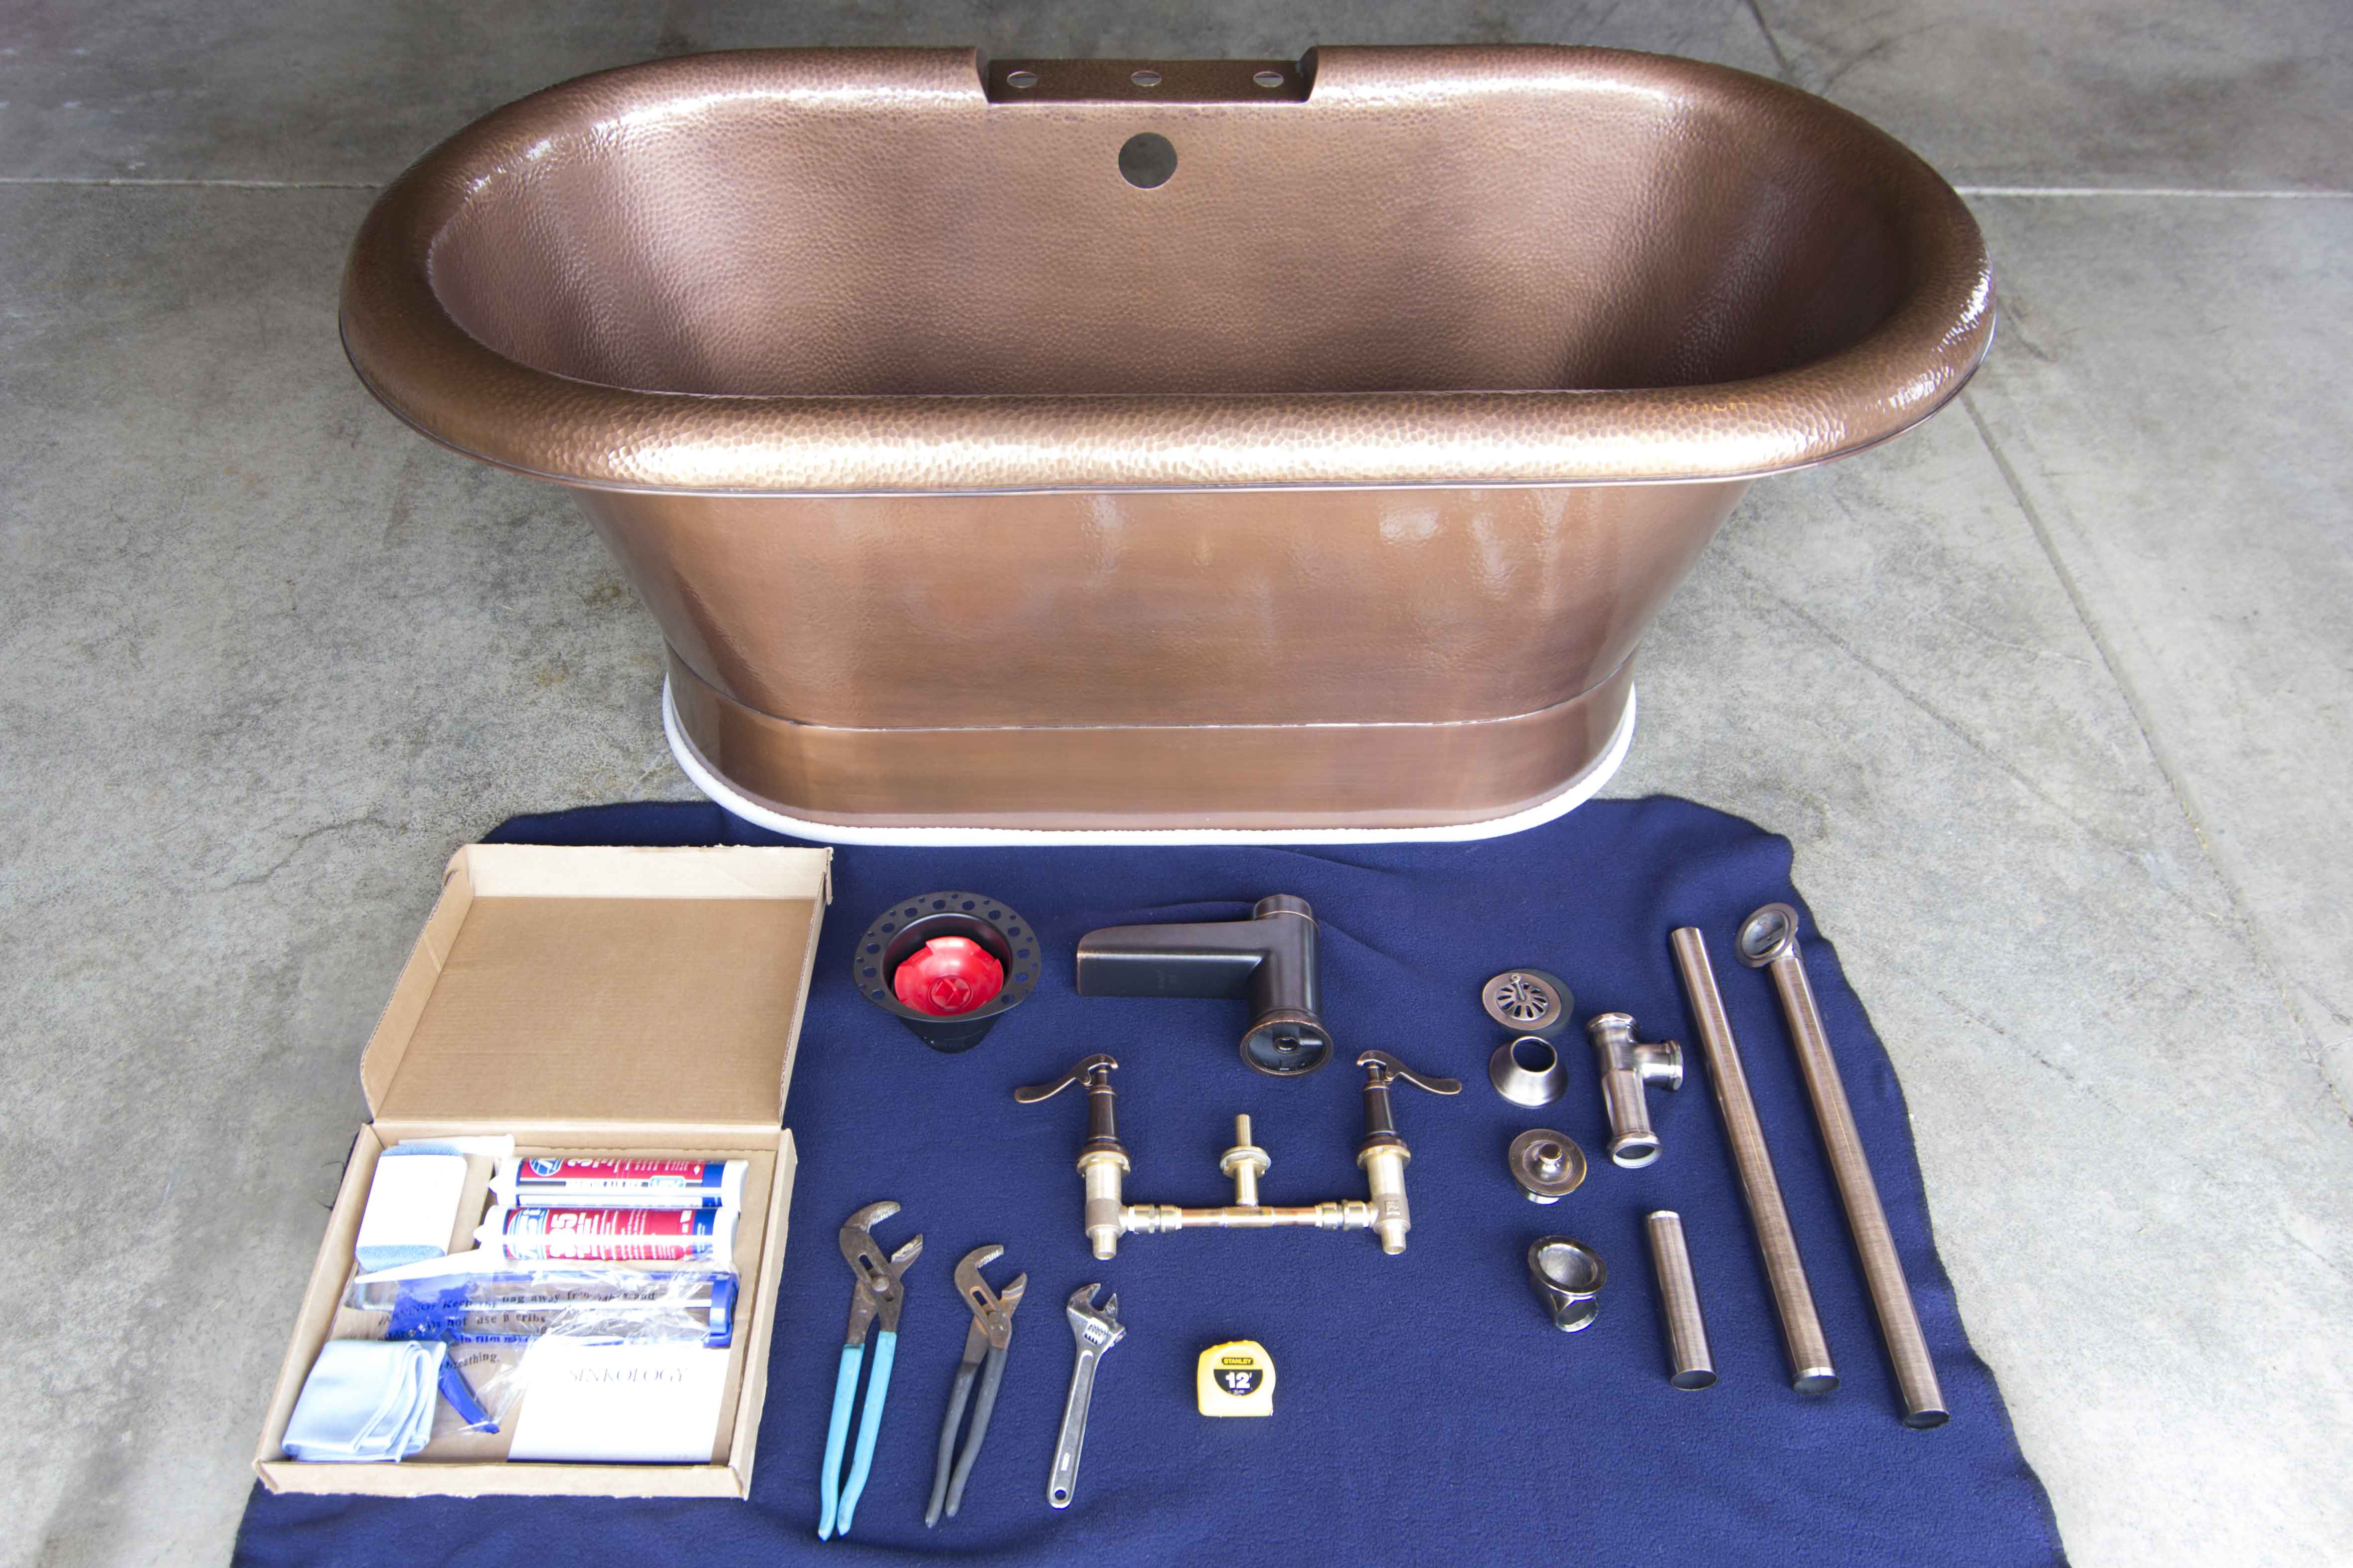 Equipments of the Freestanding Bathtub